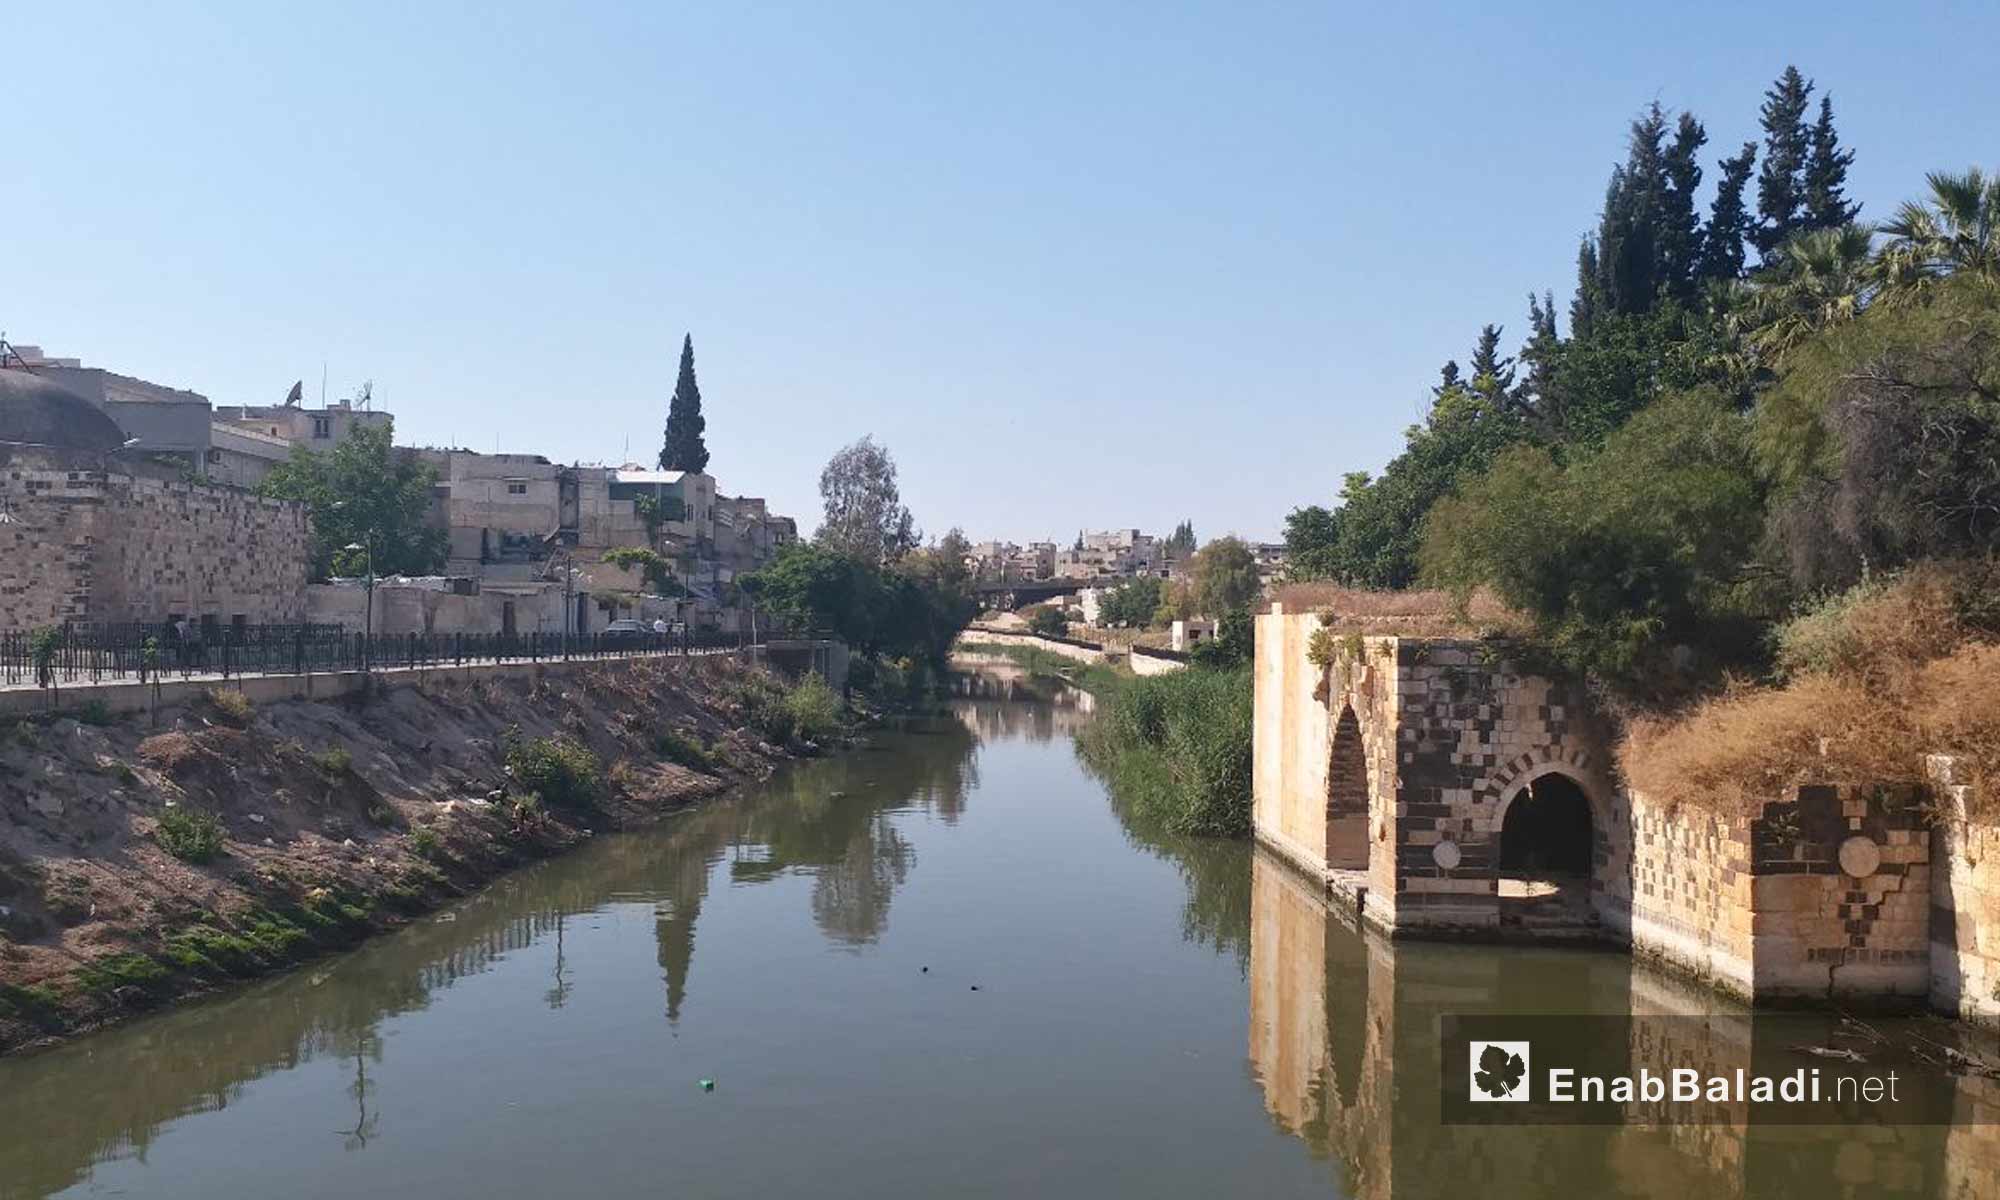 Norias of Hama on the Assi river – May 18, 2019 (Enab Baladi)